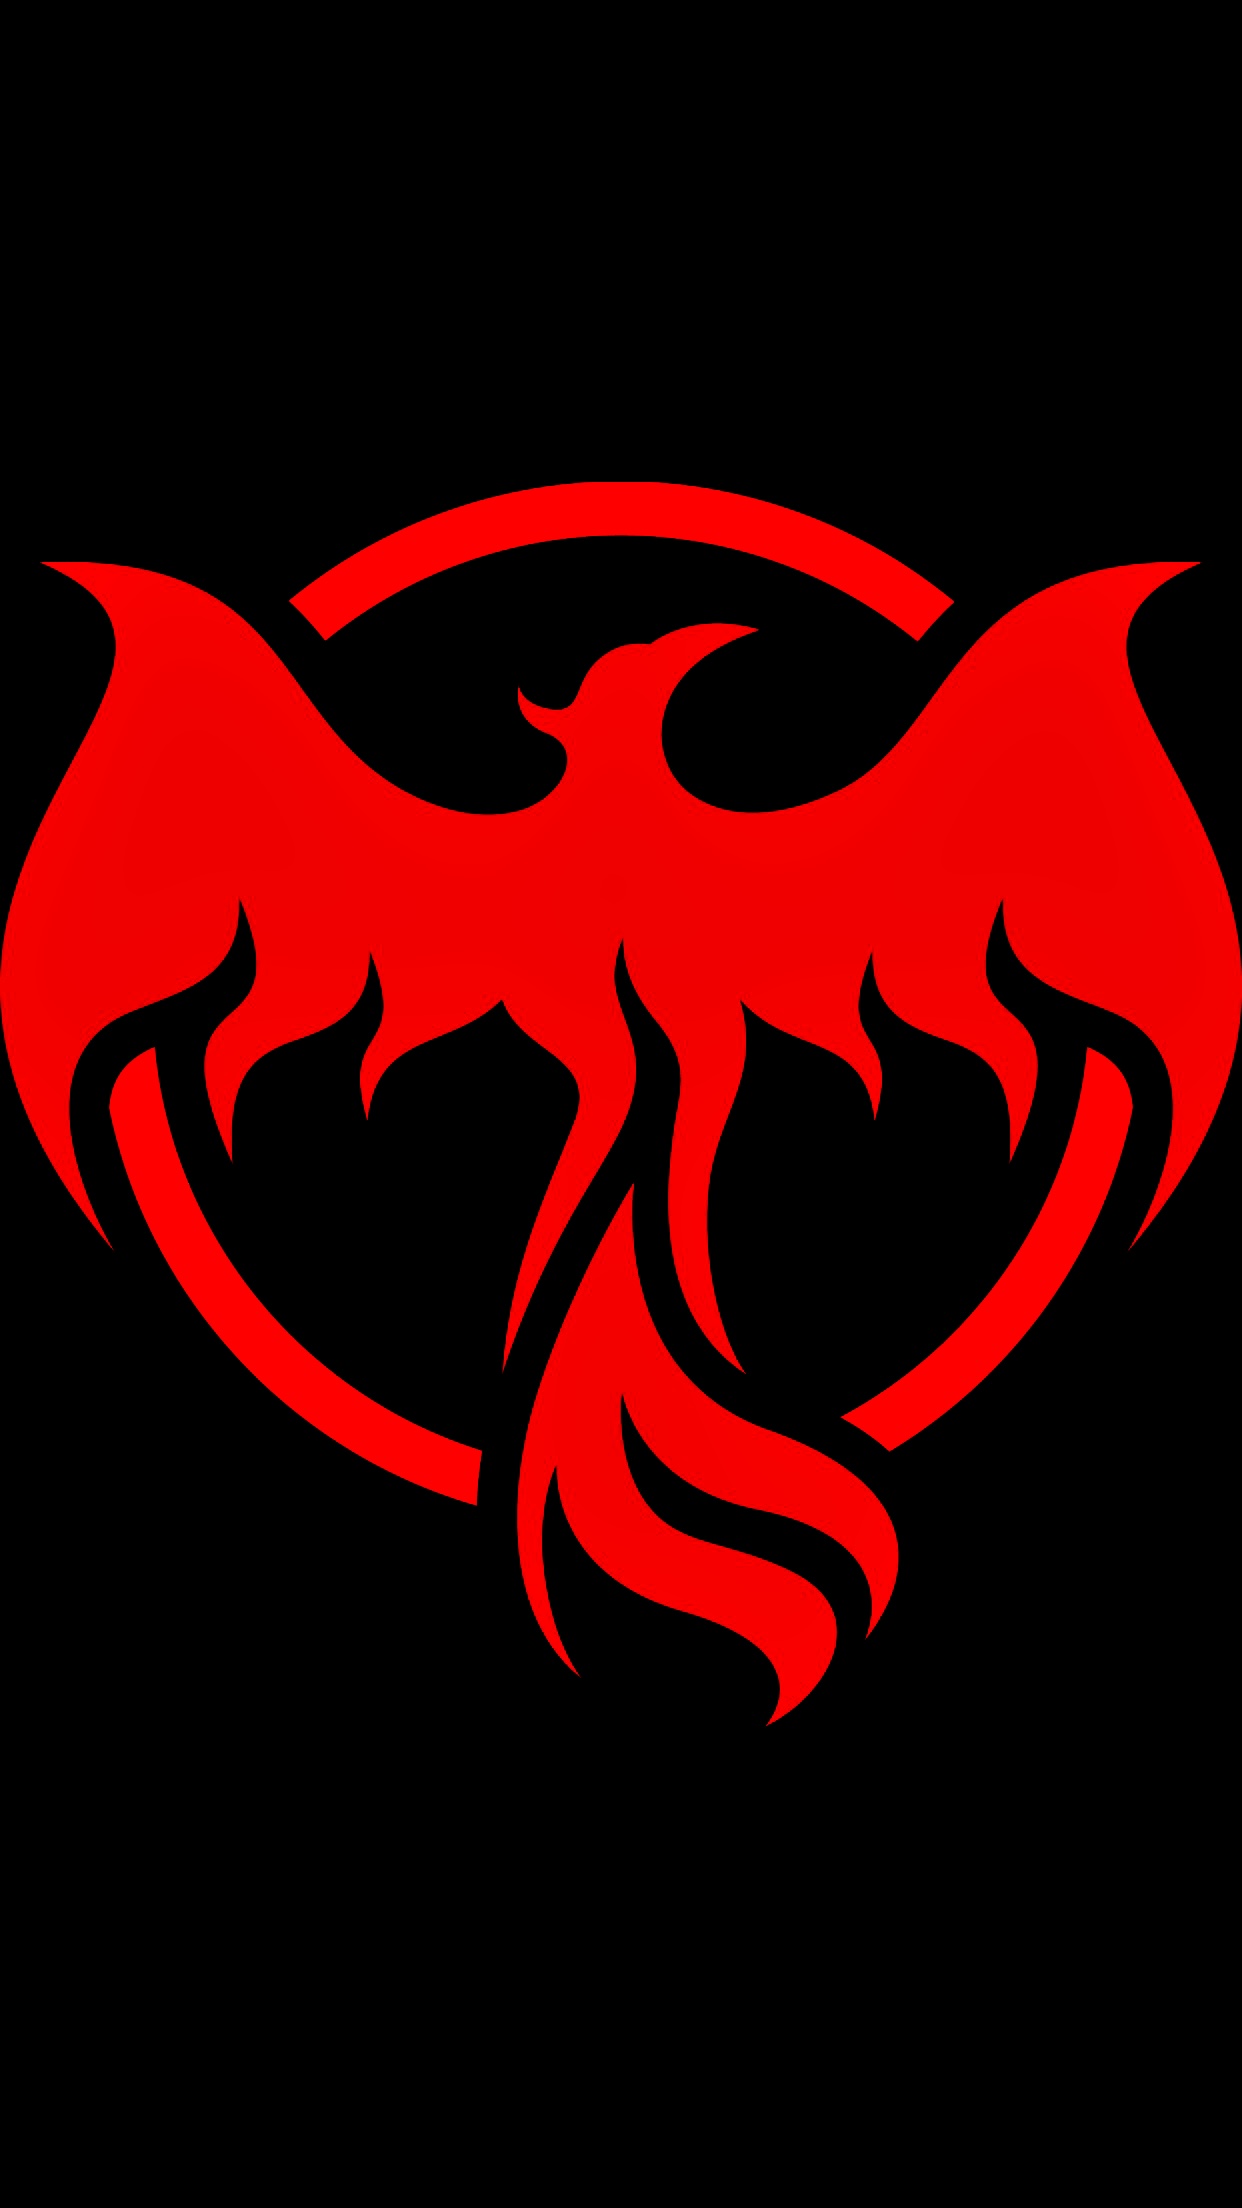 PhoenixFlare's avatar.